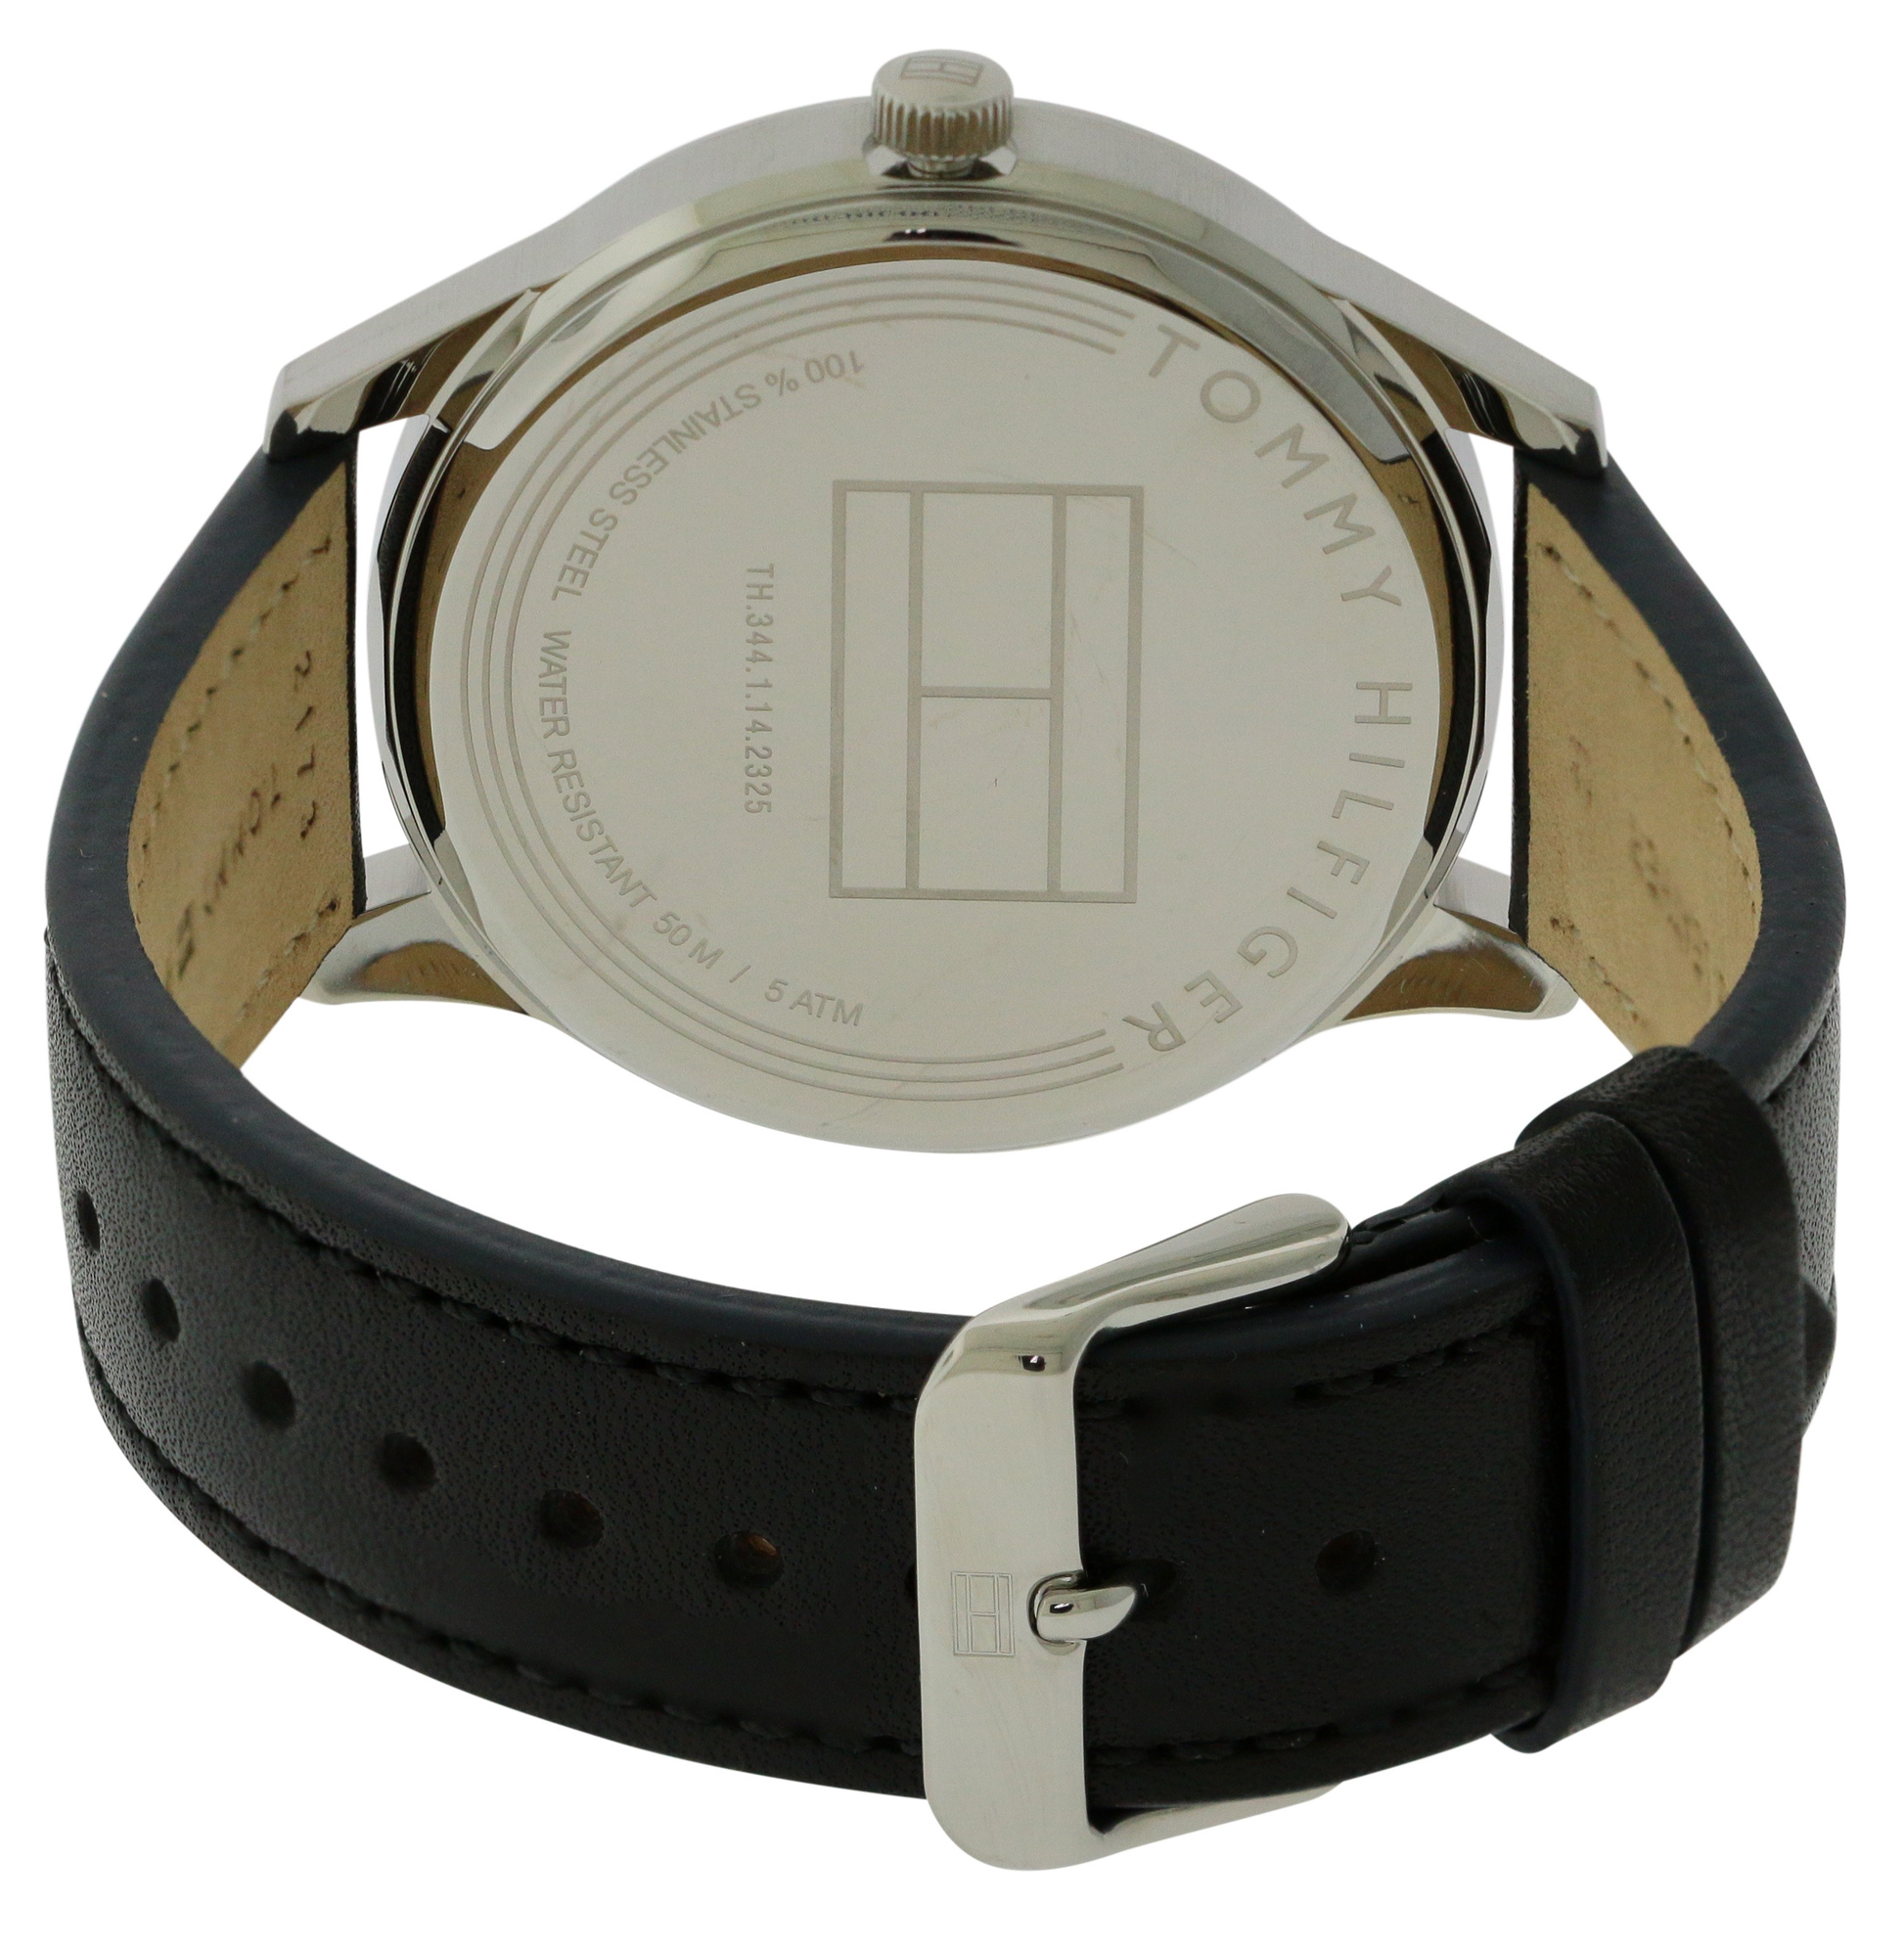 Tommy Hilfiger Damon Multifunction Black Dial Black Leather Strap Watch for Men - 1791417